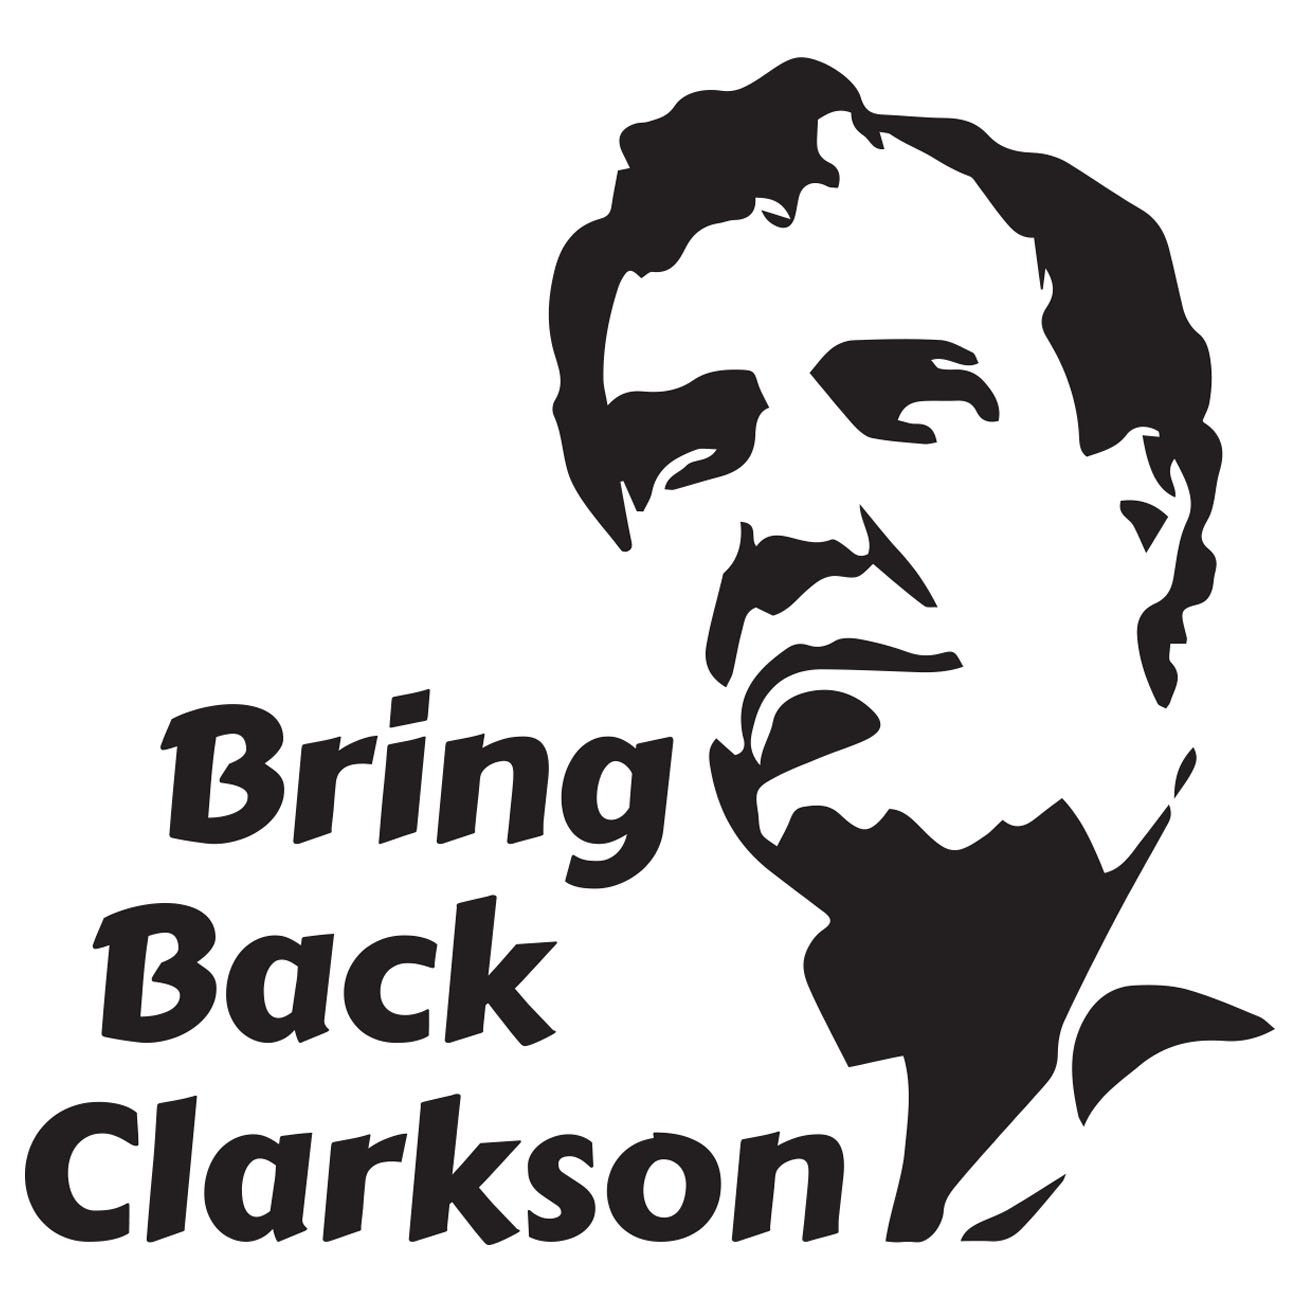 Bring back clarkson 2